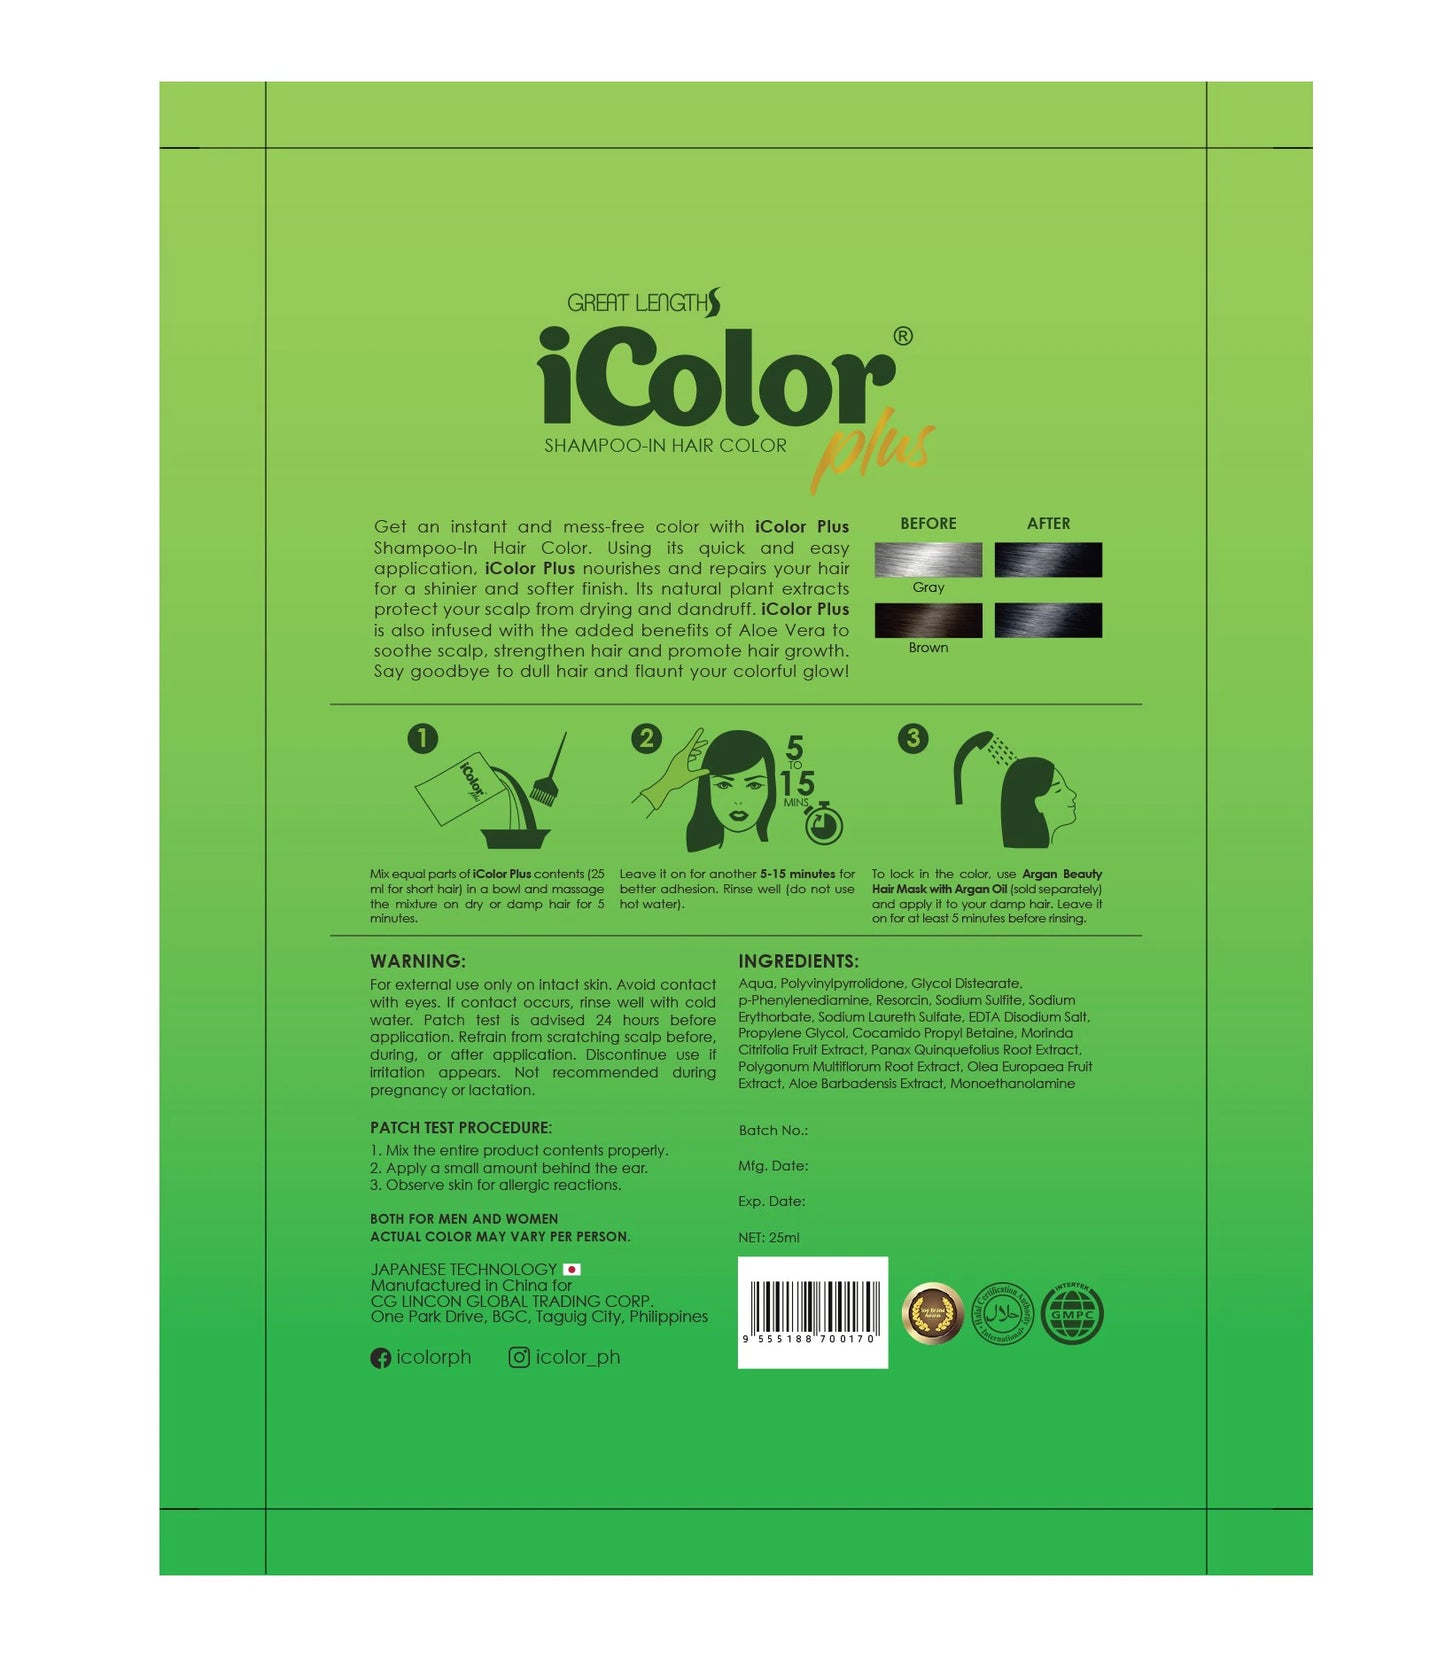 iCOLOR Organic Hair Dye Shampoo 25ml  (Color: 01 Black )